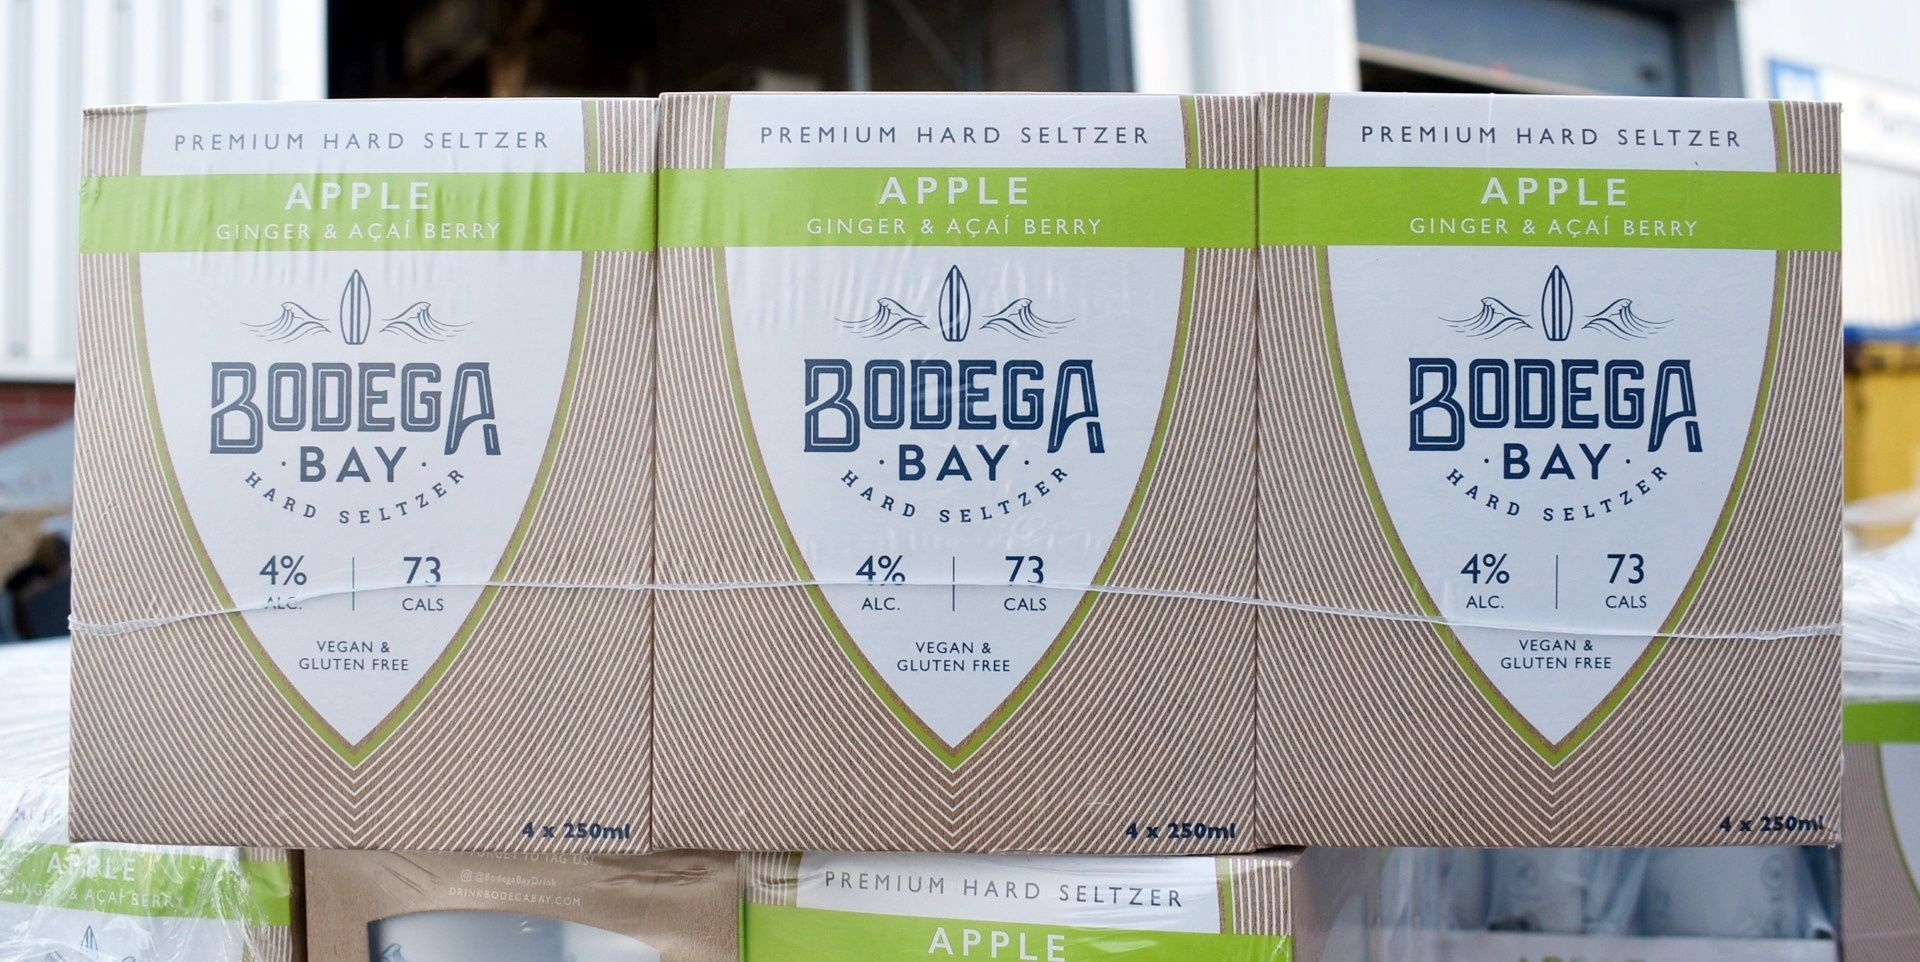 24 x Bodega Bay Hard Seltzer 250ml Alcoholic Sparkling Water Drinks - Apple Ginger & Acai Berry - 4% - Image 9 of 9